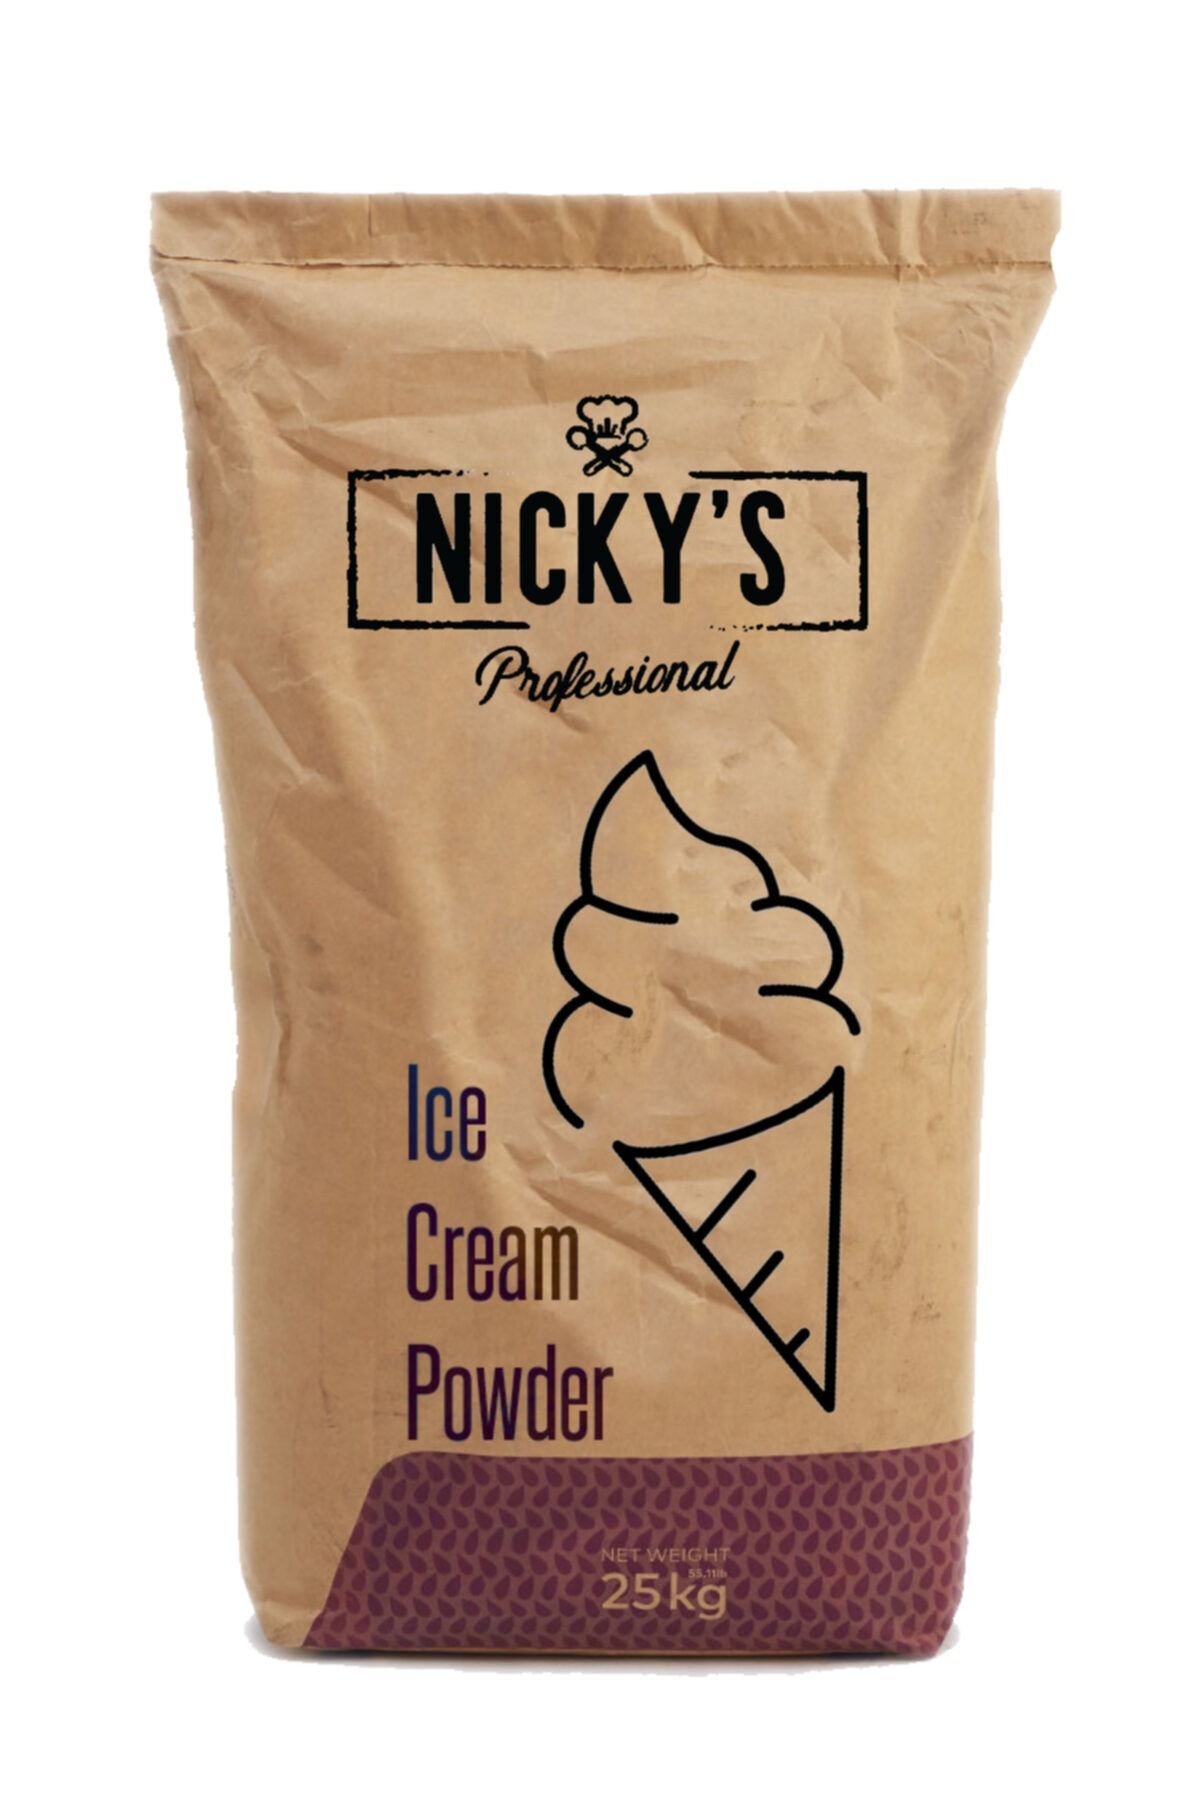 Nickys Professional Nicky's Profsseional Süt Bazlı Vaniyalı Dondurma Tozu 25 Kg